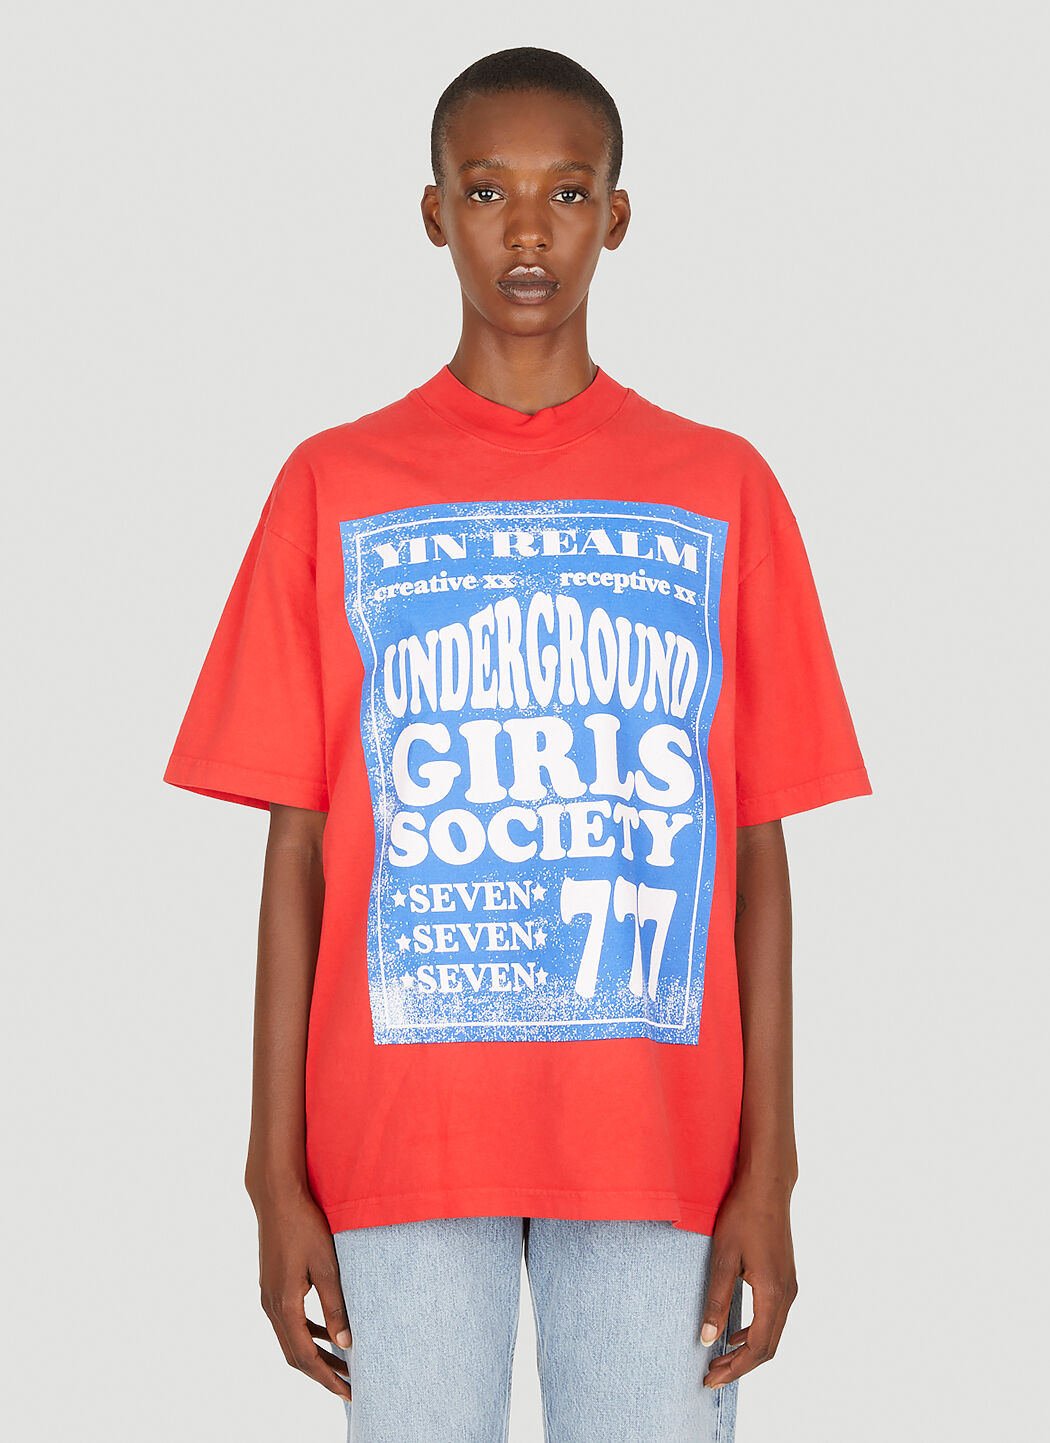 Come Tees Underground Girls Society 레이버 티셔츠 레드 com0349001